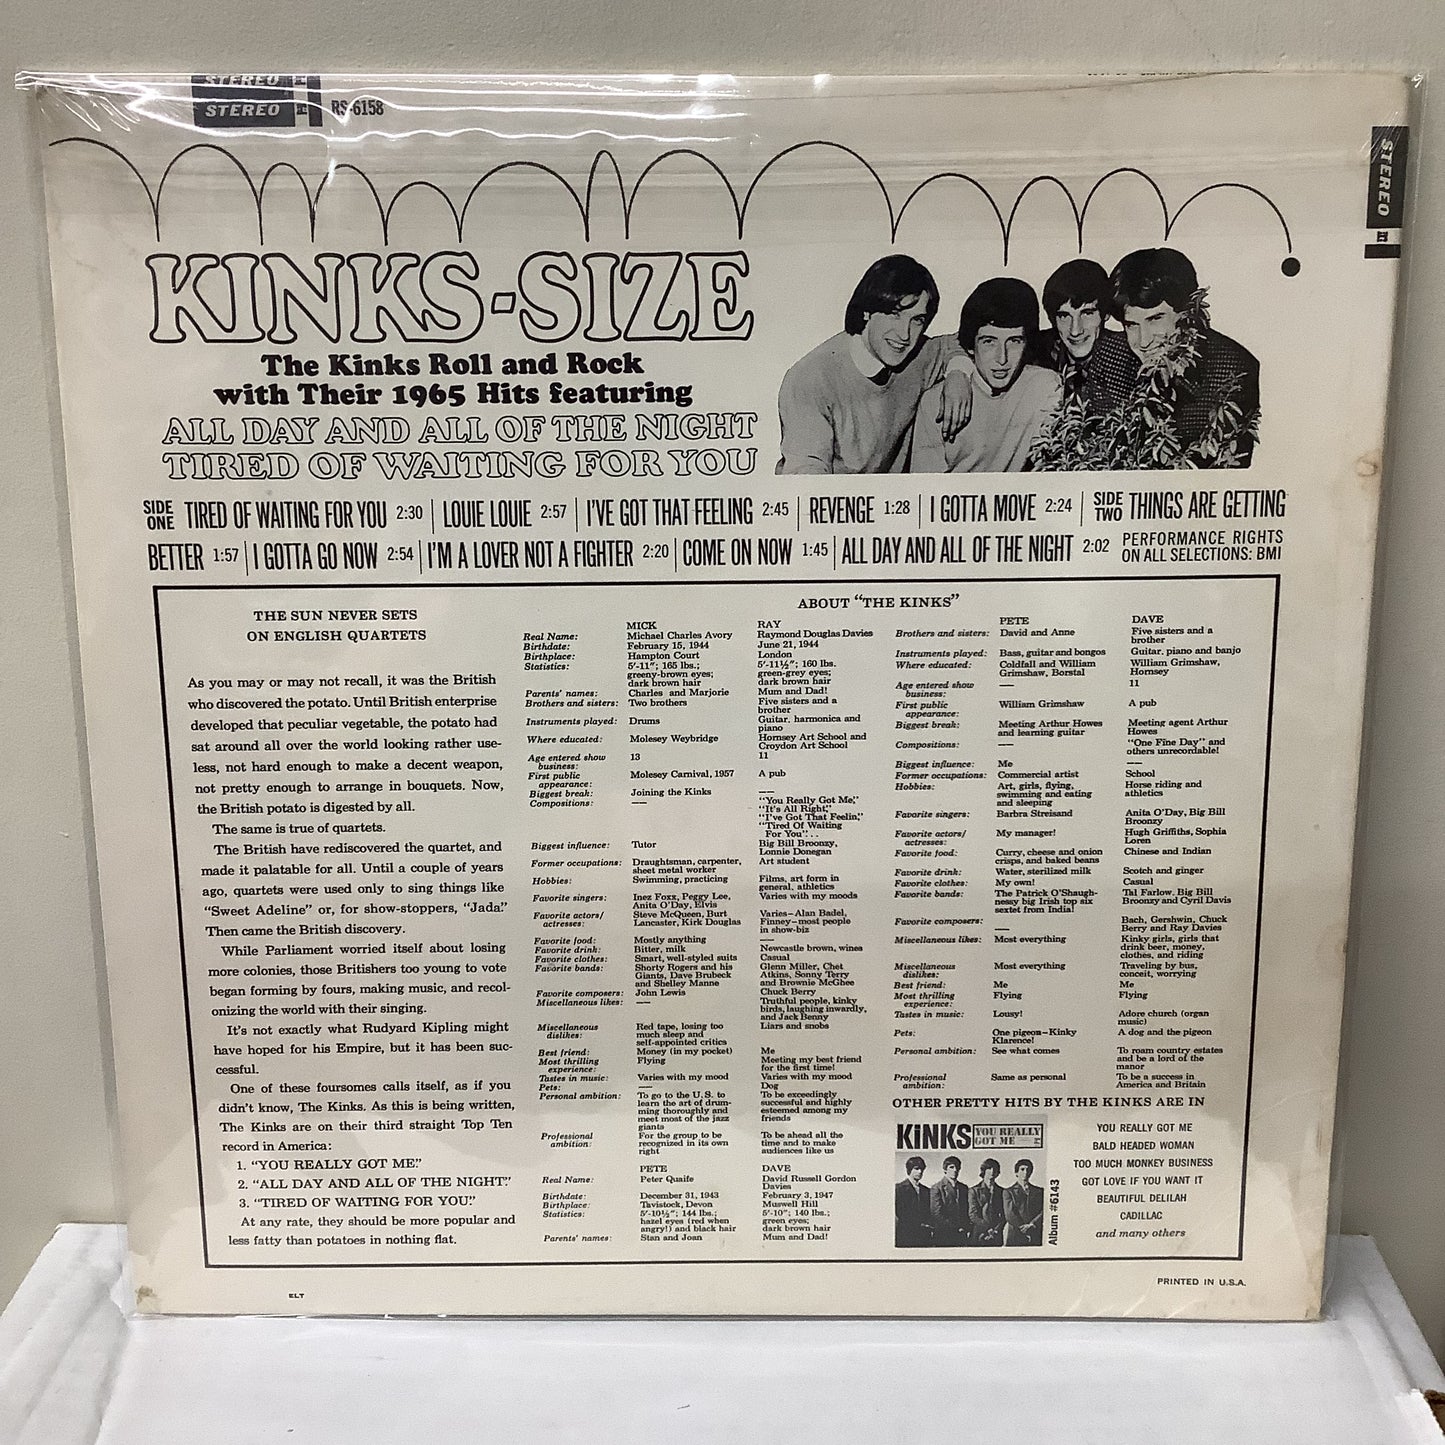 The Kinks – Kinks-Size – LP